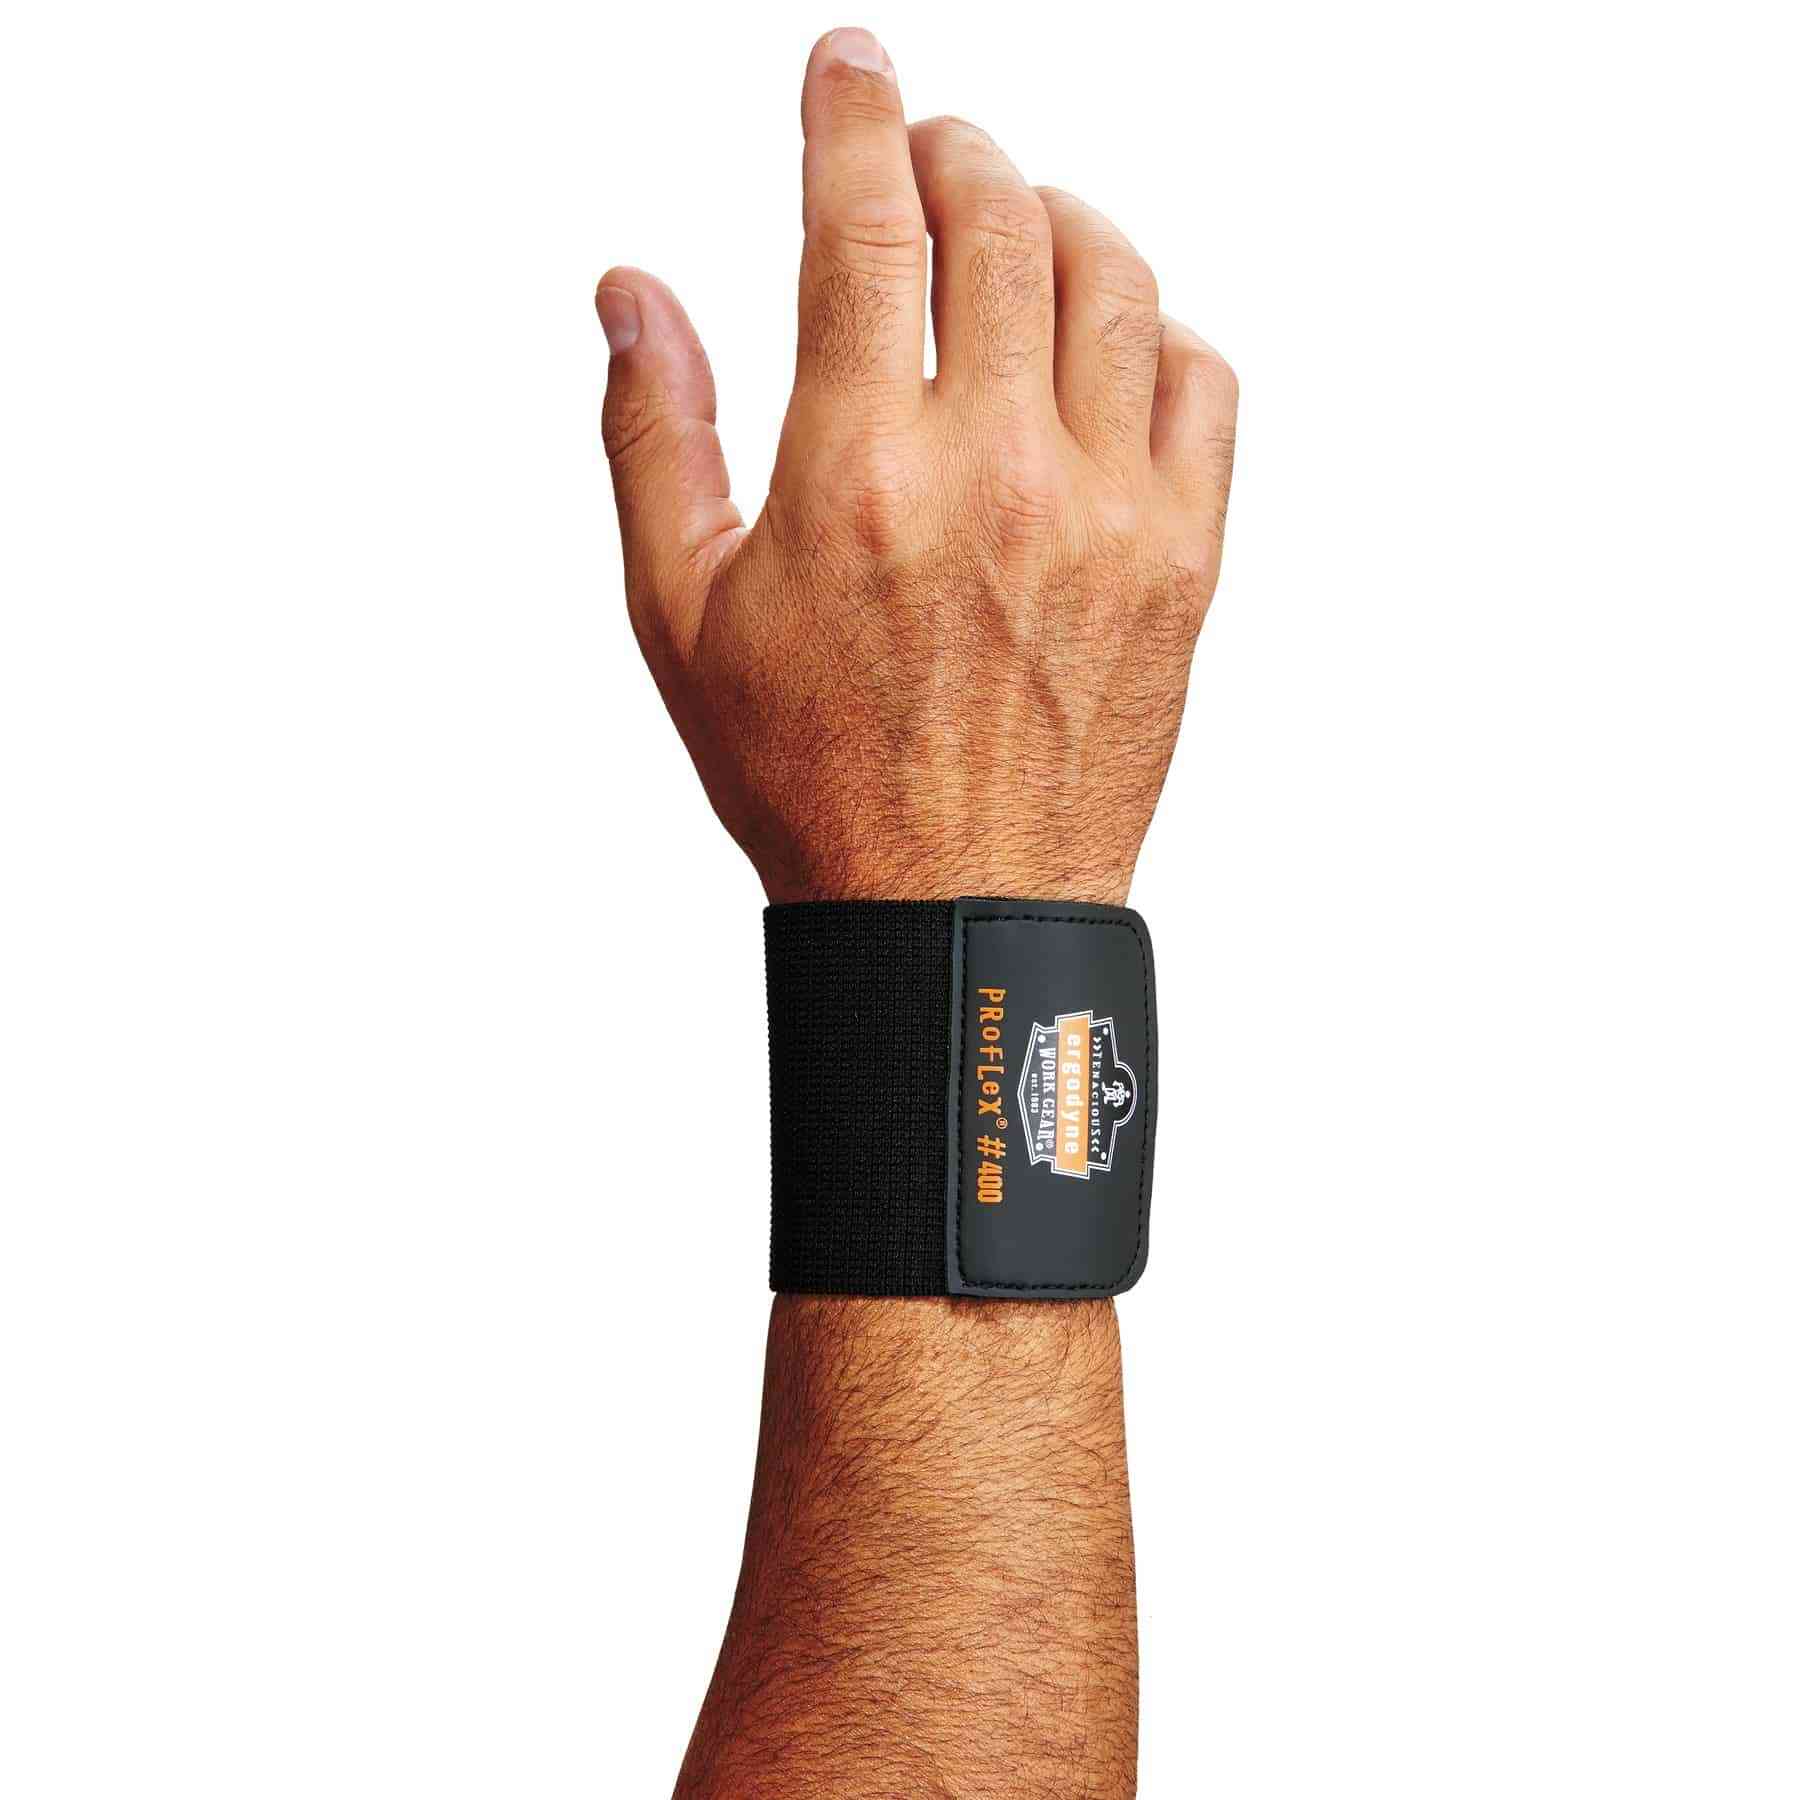 Wrist Wrap Support, Universal